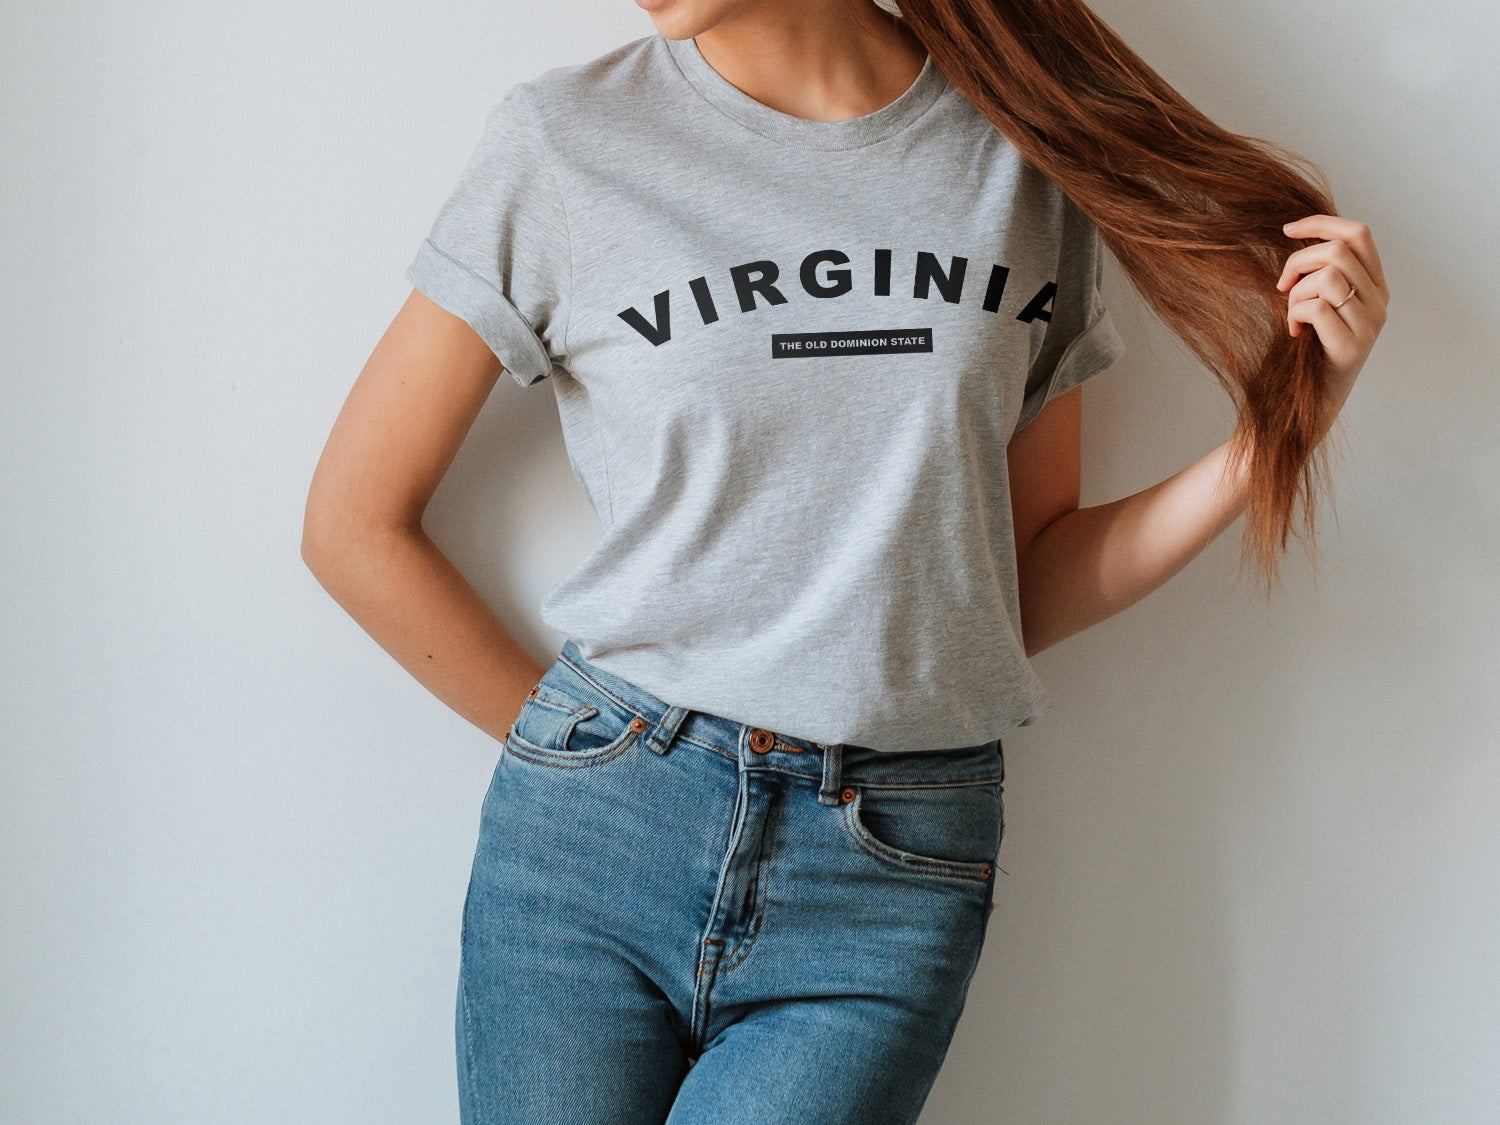 Virginia The Old Dominion State T-shirt - United States Name & Slogan Minimal Design Printed Tee Shirt